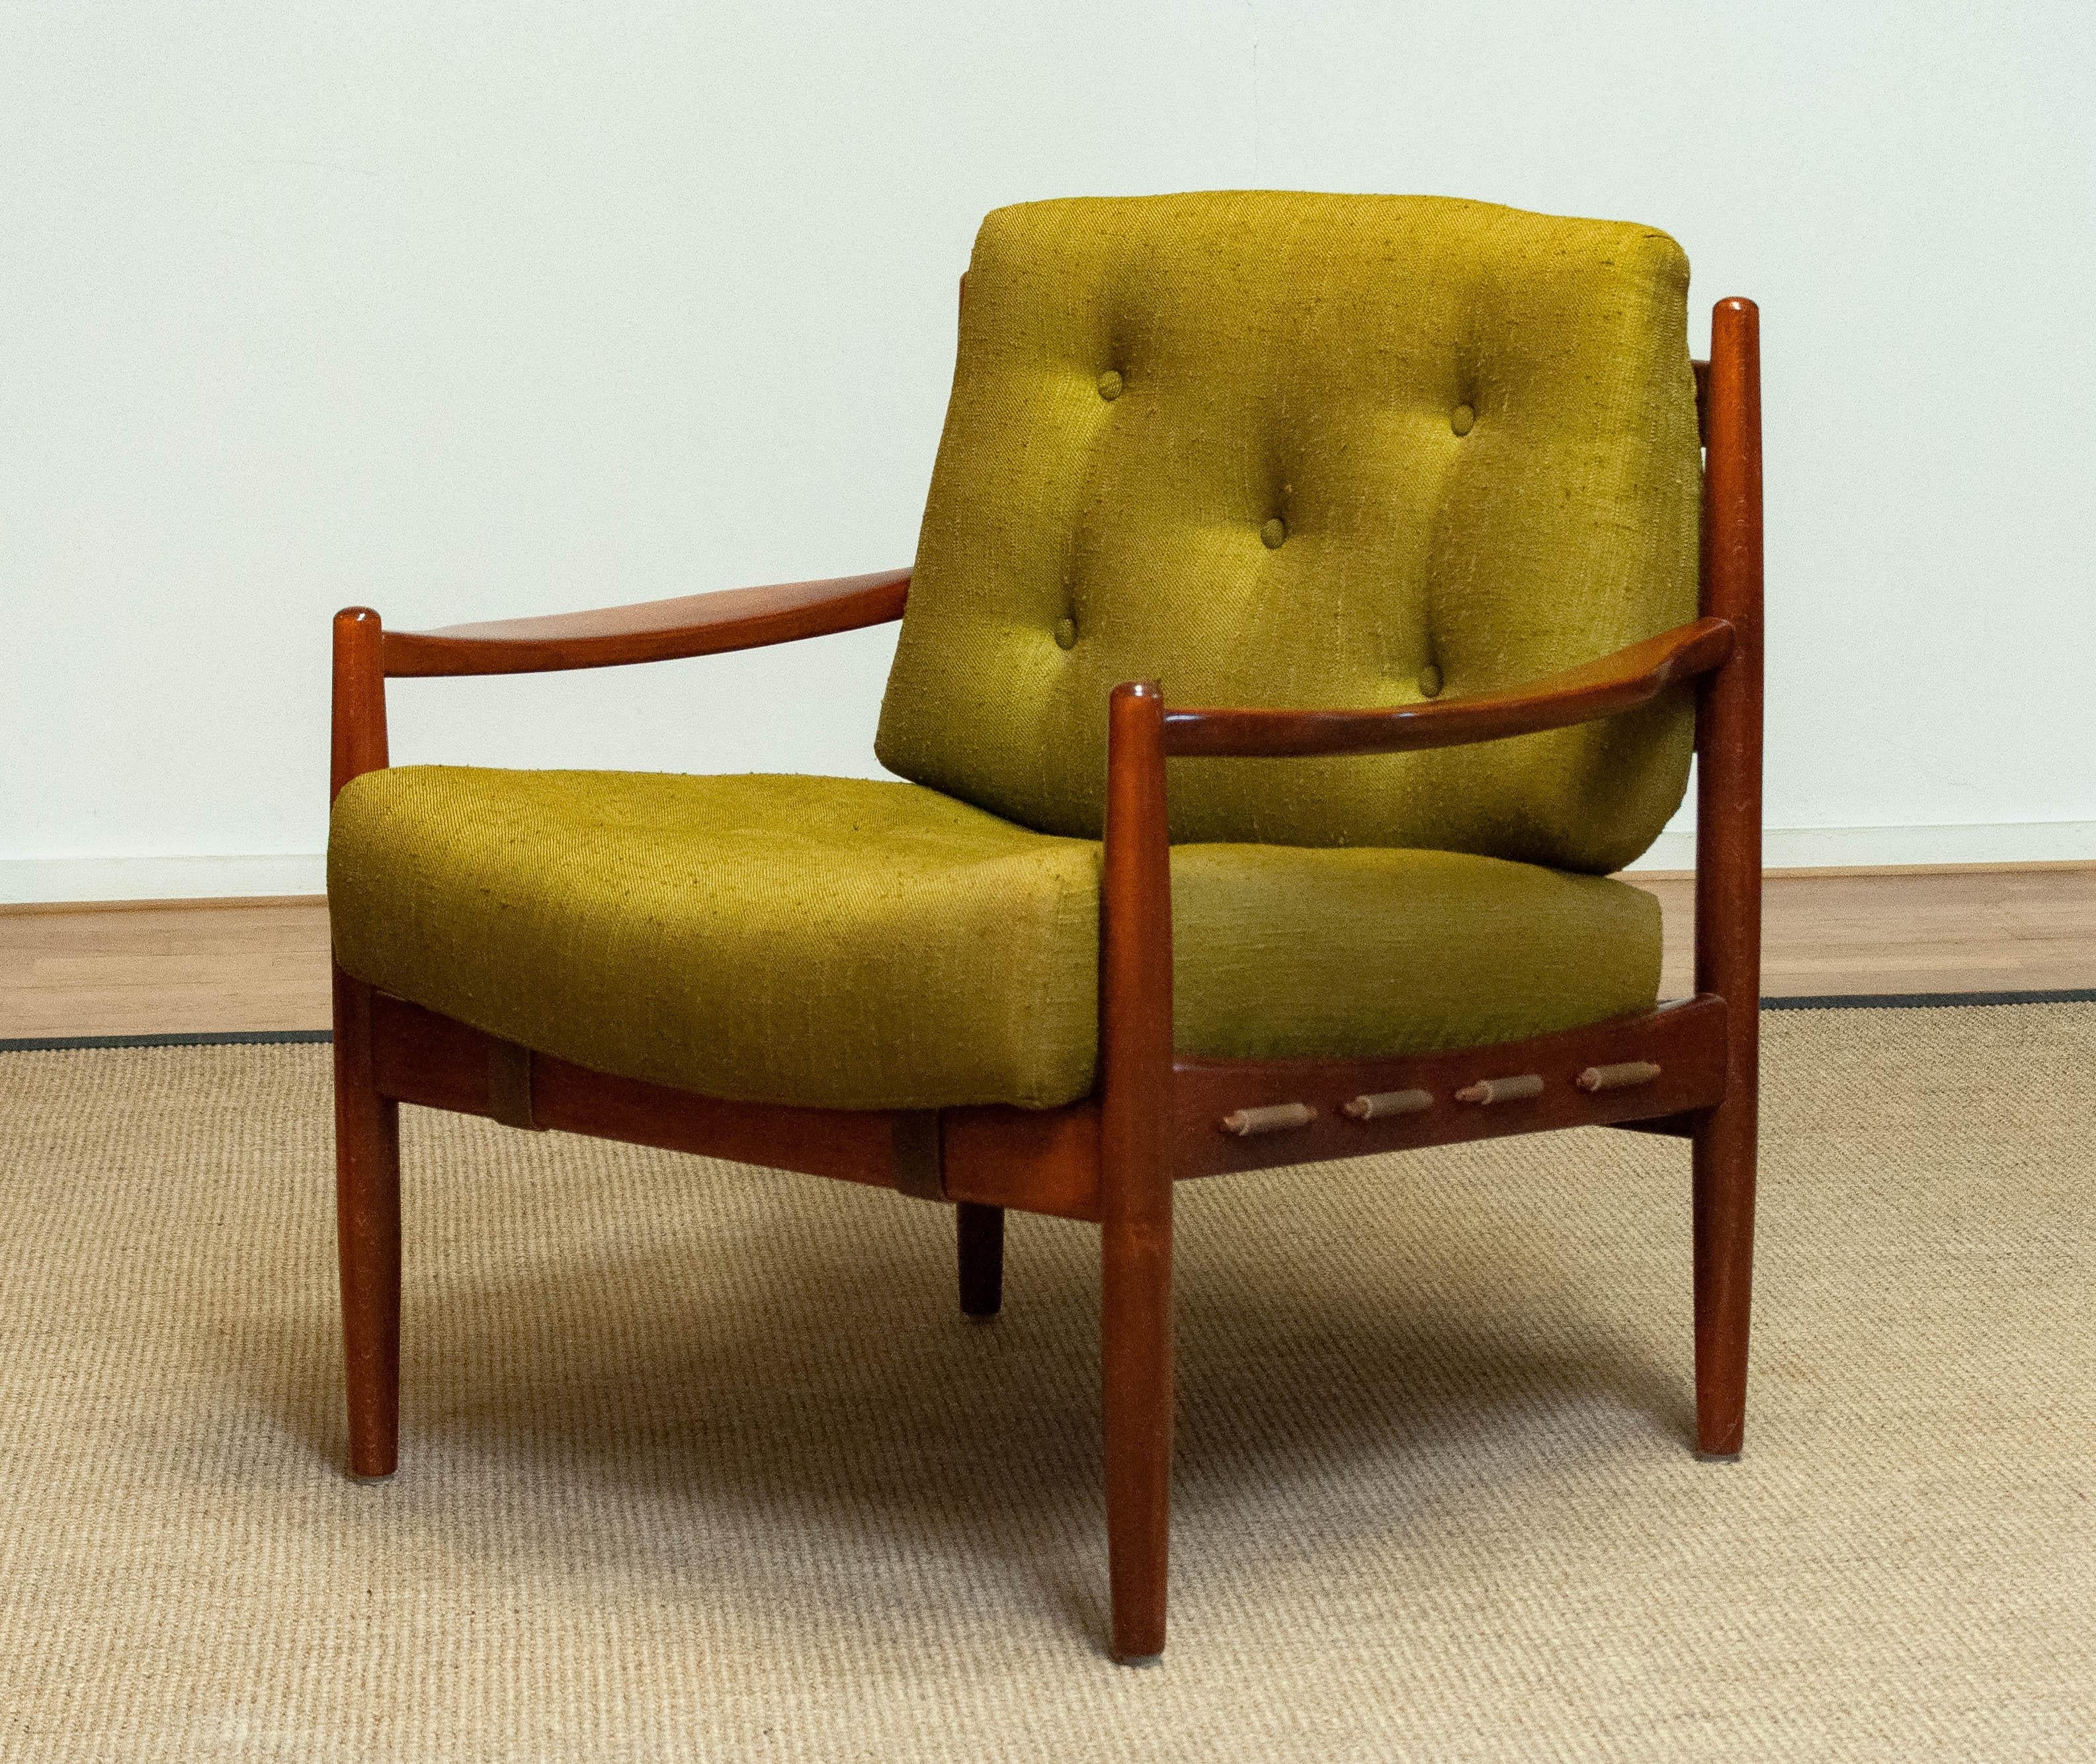 60's Green Linen Lounge Chair By Ingemar Thillmark For OPE Sweden 'Model Läckö' In Good Condition For Sale In Silvolde, Gelderland